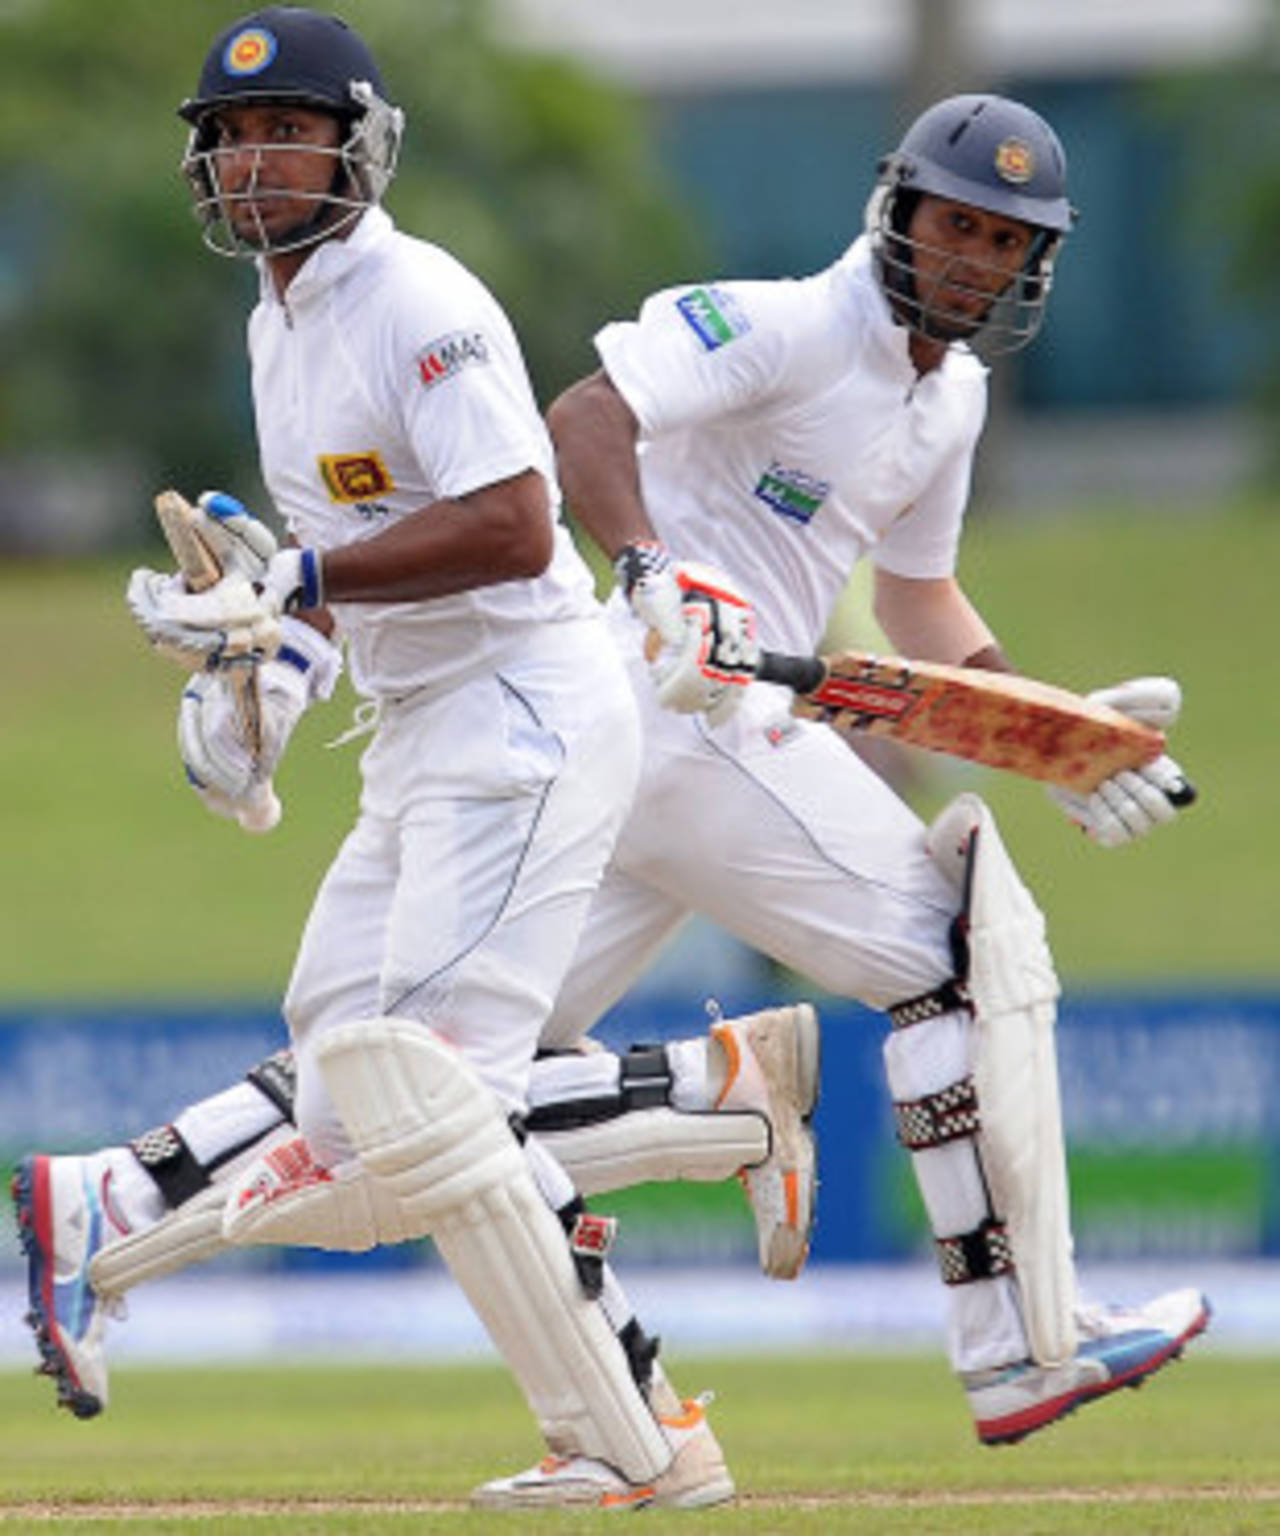 Dimuth Karunaratne and Kumar Sangakkara during their stand, Sri Lanka v Bangladesh, 1st Test, Galle, 1st day, March 8, 2013